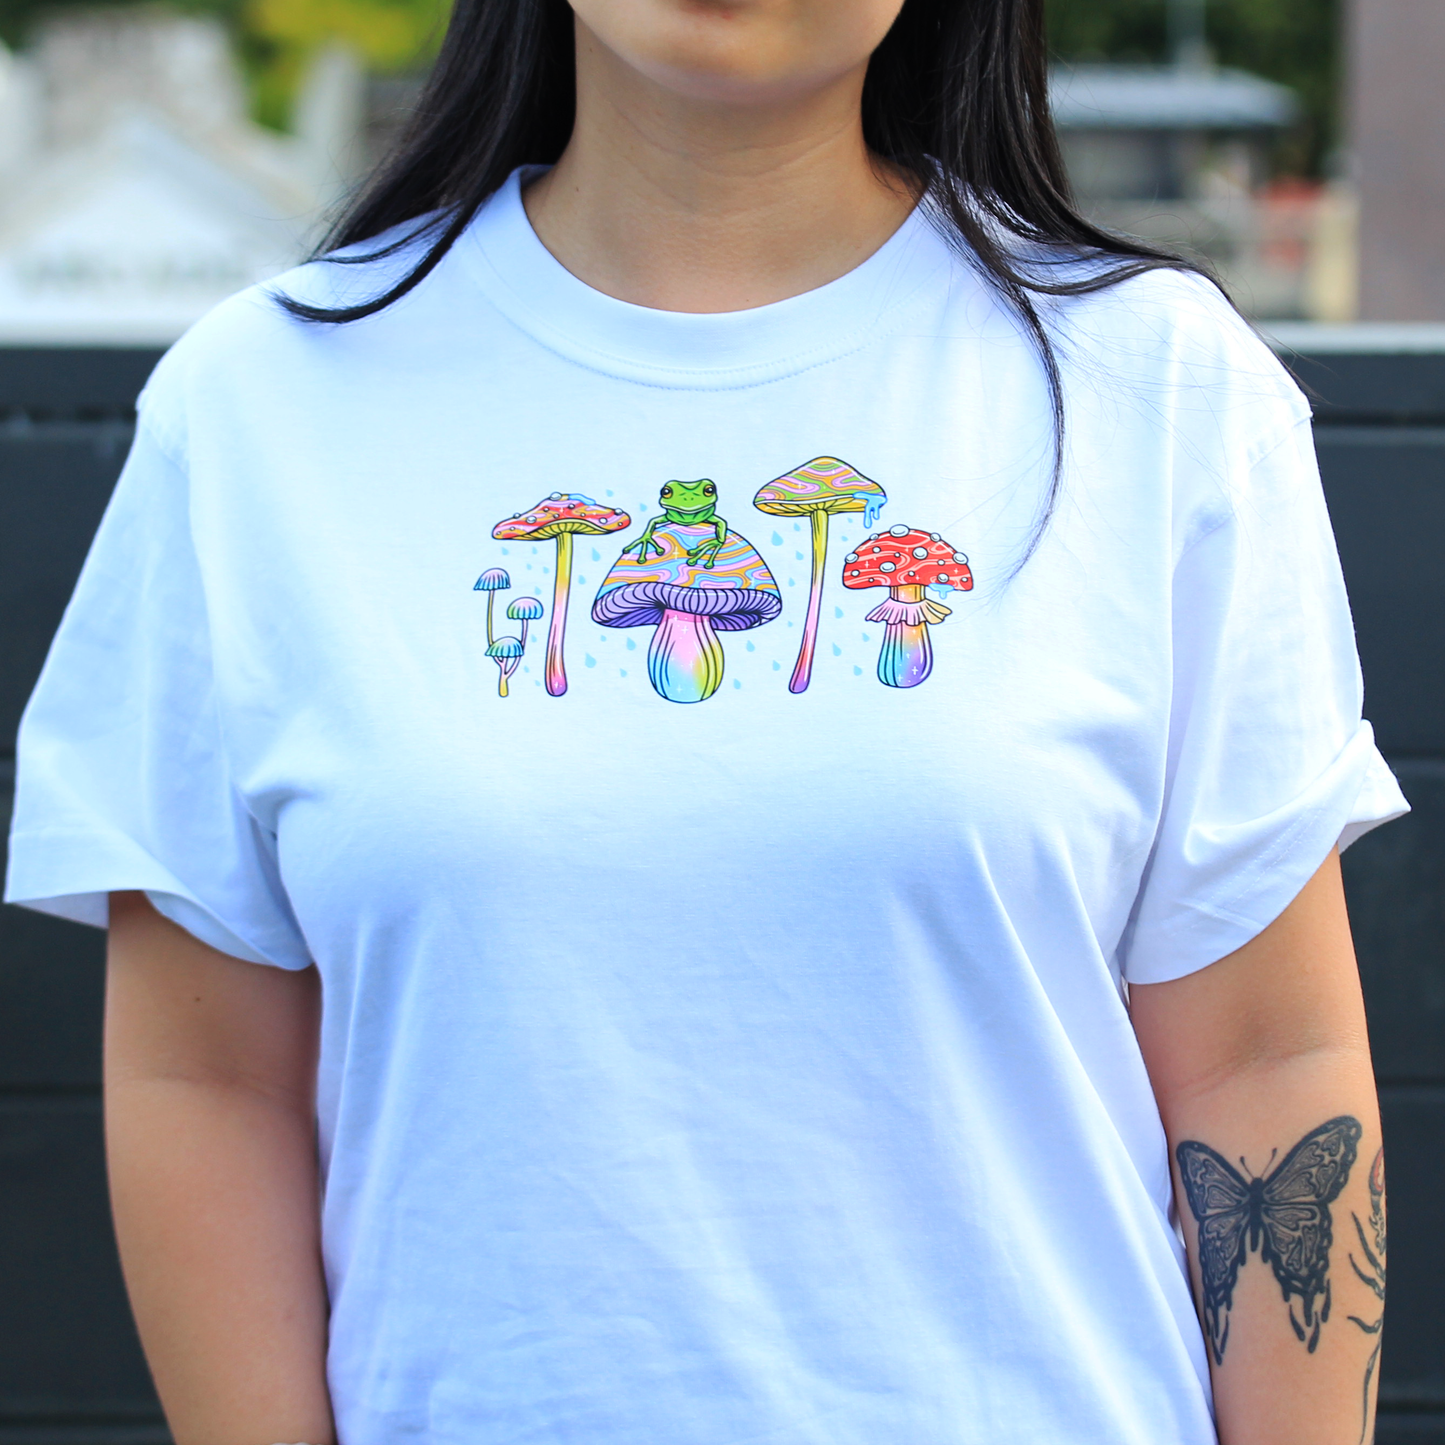 The Frog and Mushrooms Short Sleeve White Tshirt